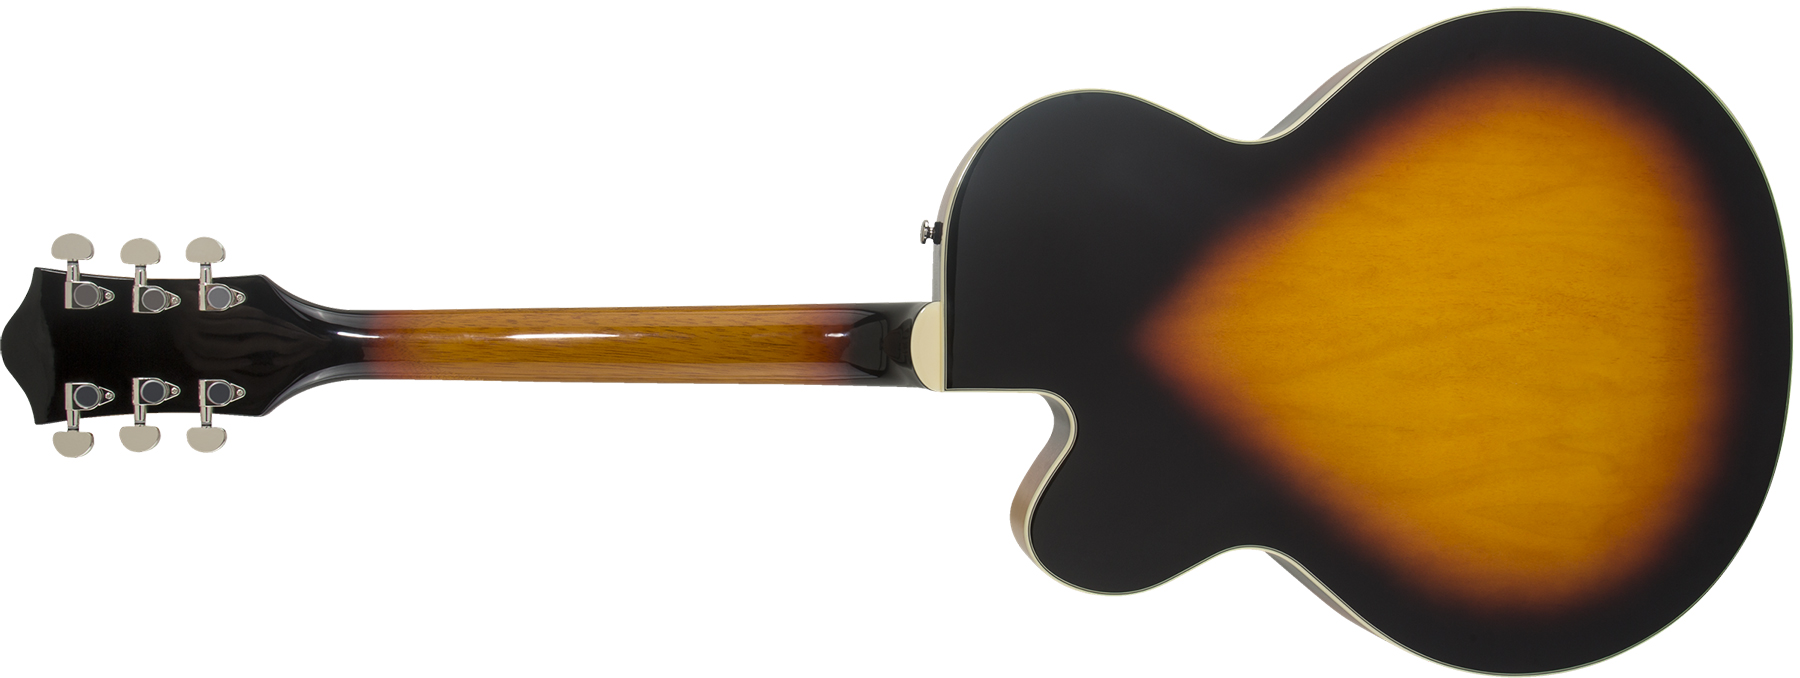 Gretsch G2420 Streamliner Hollow Body With Chromatic Ii 2h Ht Lau - Aged Brooklyn Burst - Semi-hollow electric guitar - Variation 1